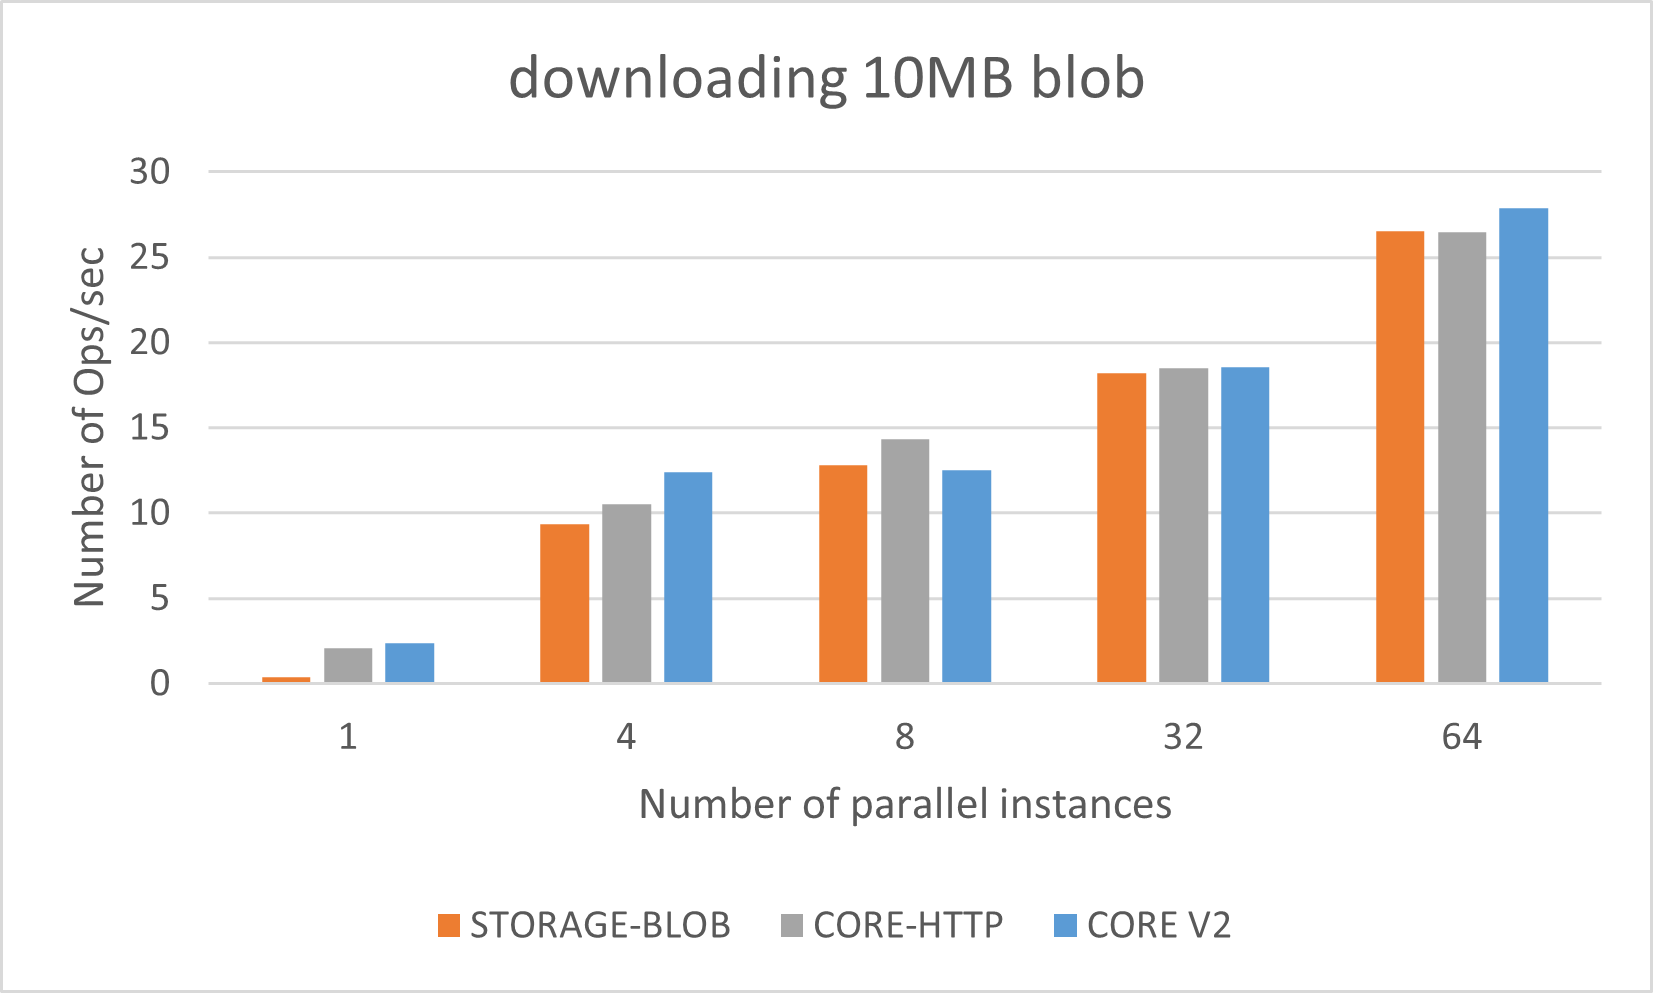 Blob download with SAS 10MB